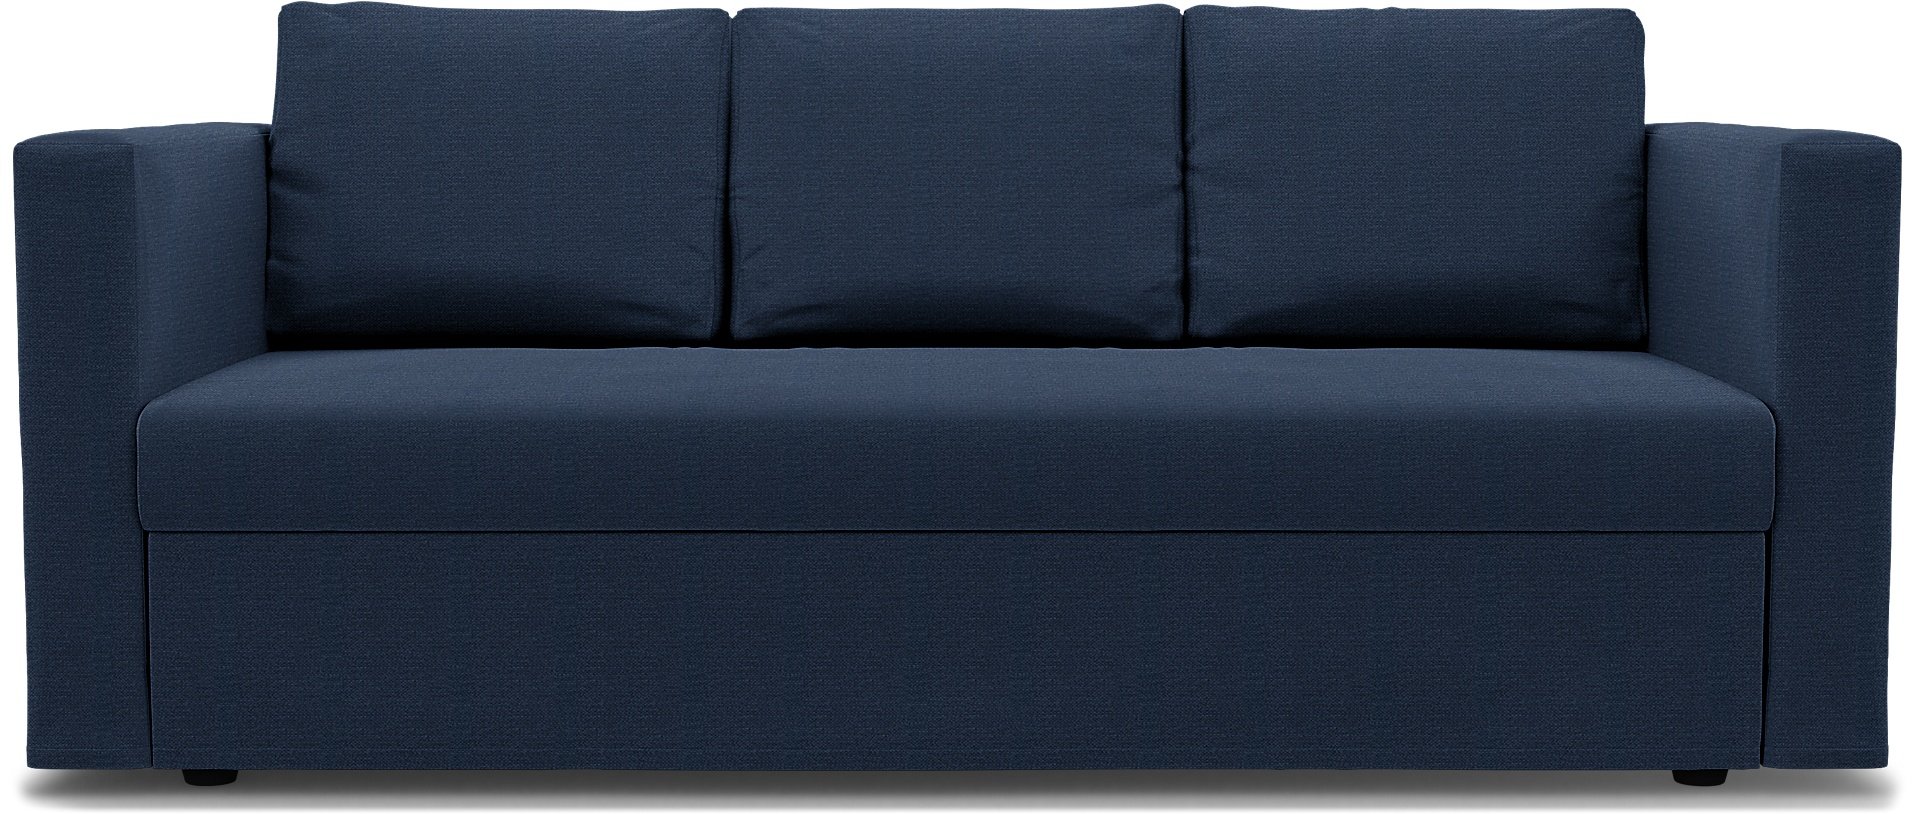 IKEA - Friheten 3 Seater Sofa Bed Cover, Navy Blue, Linen - Bemz